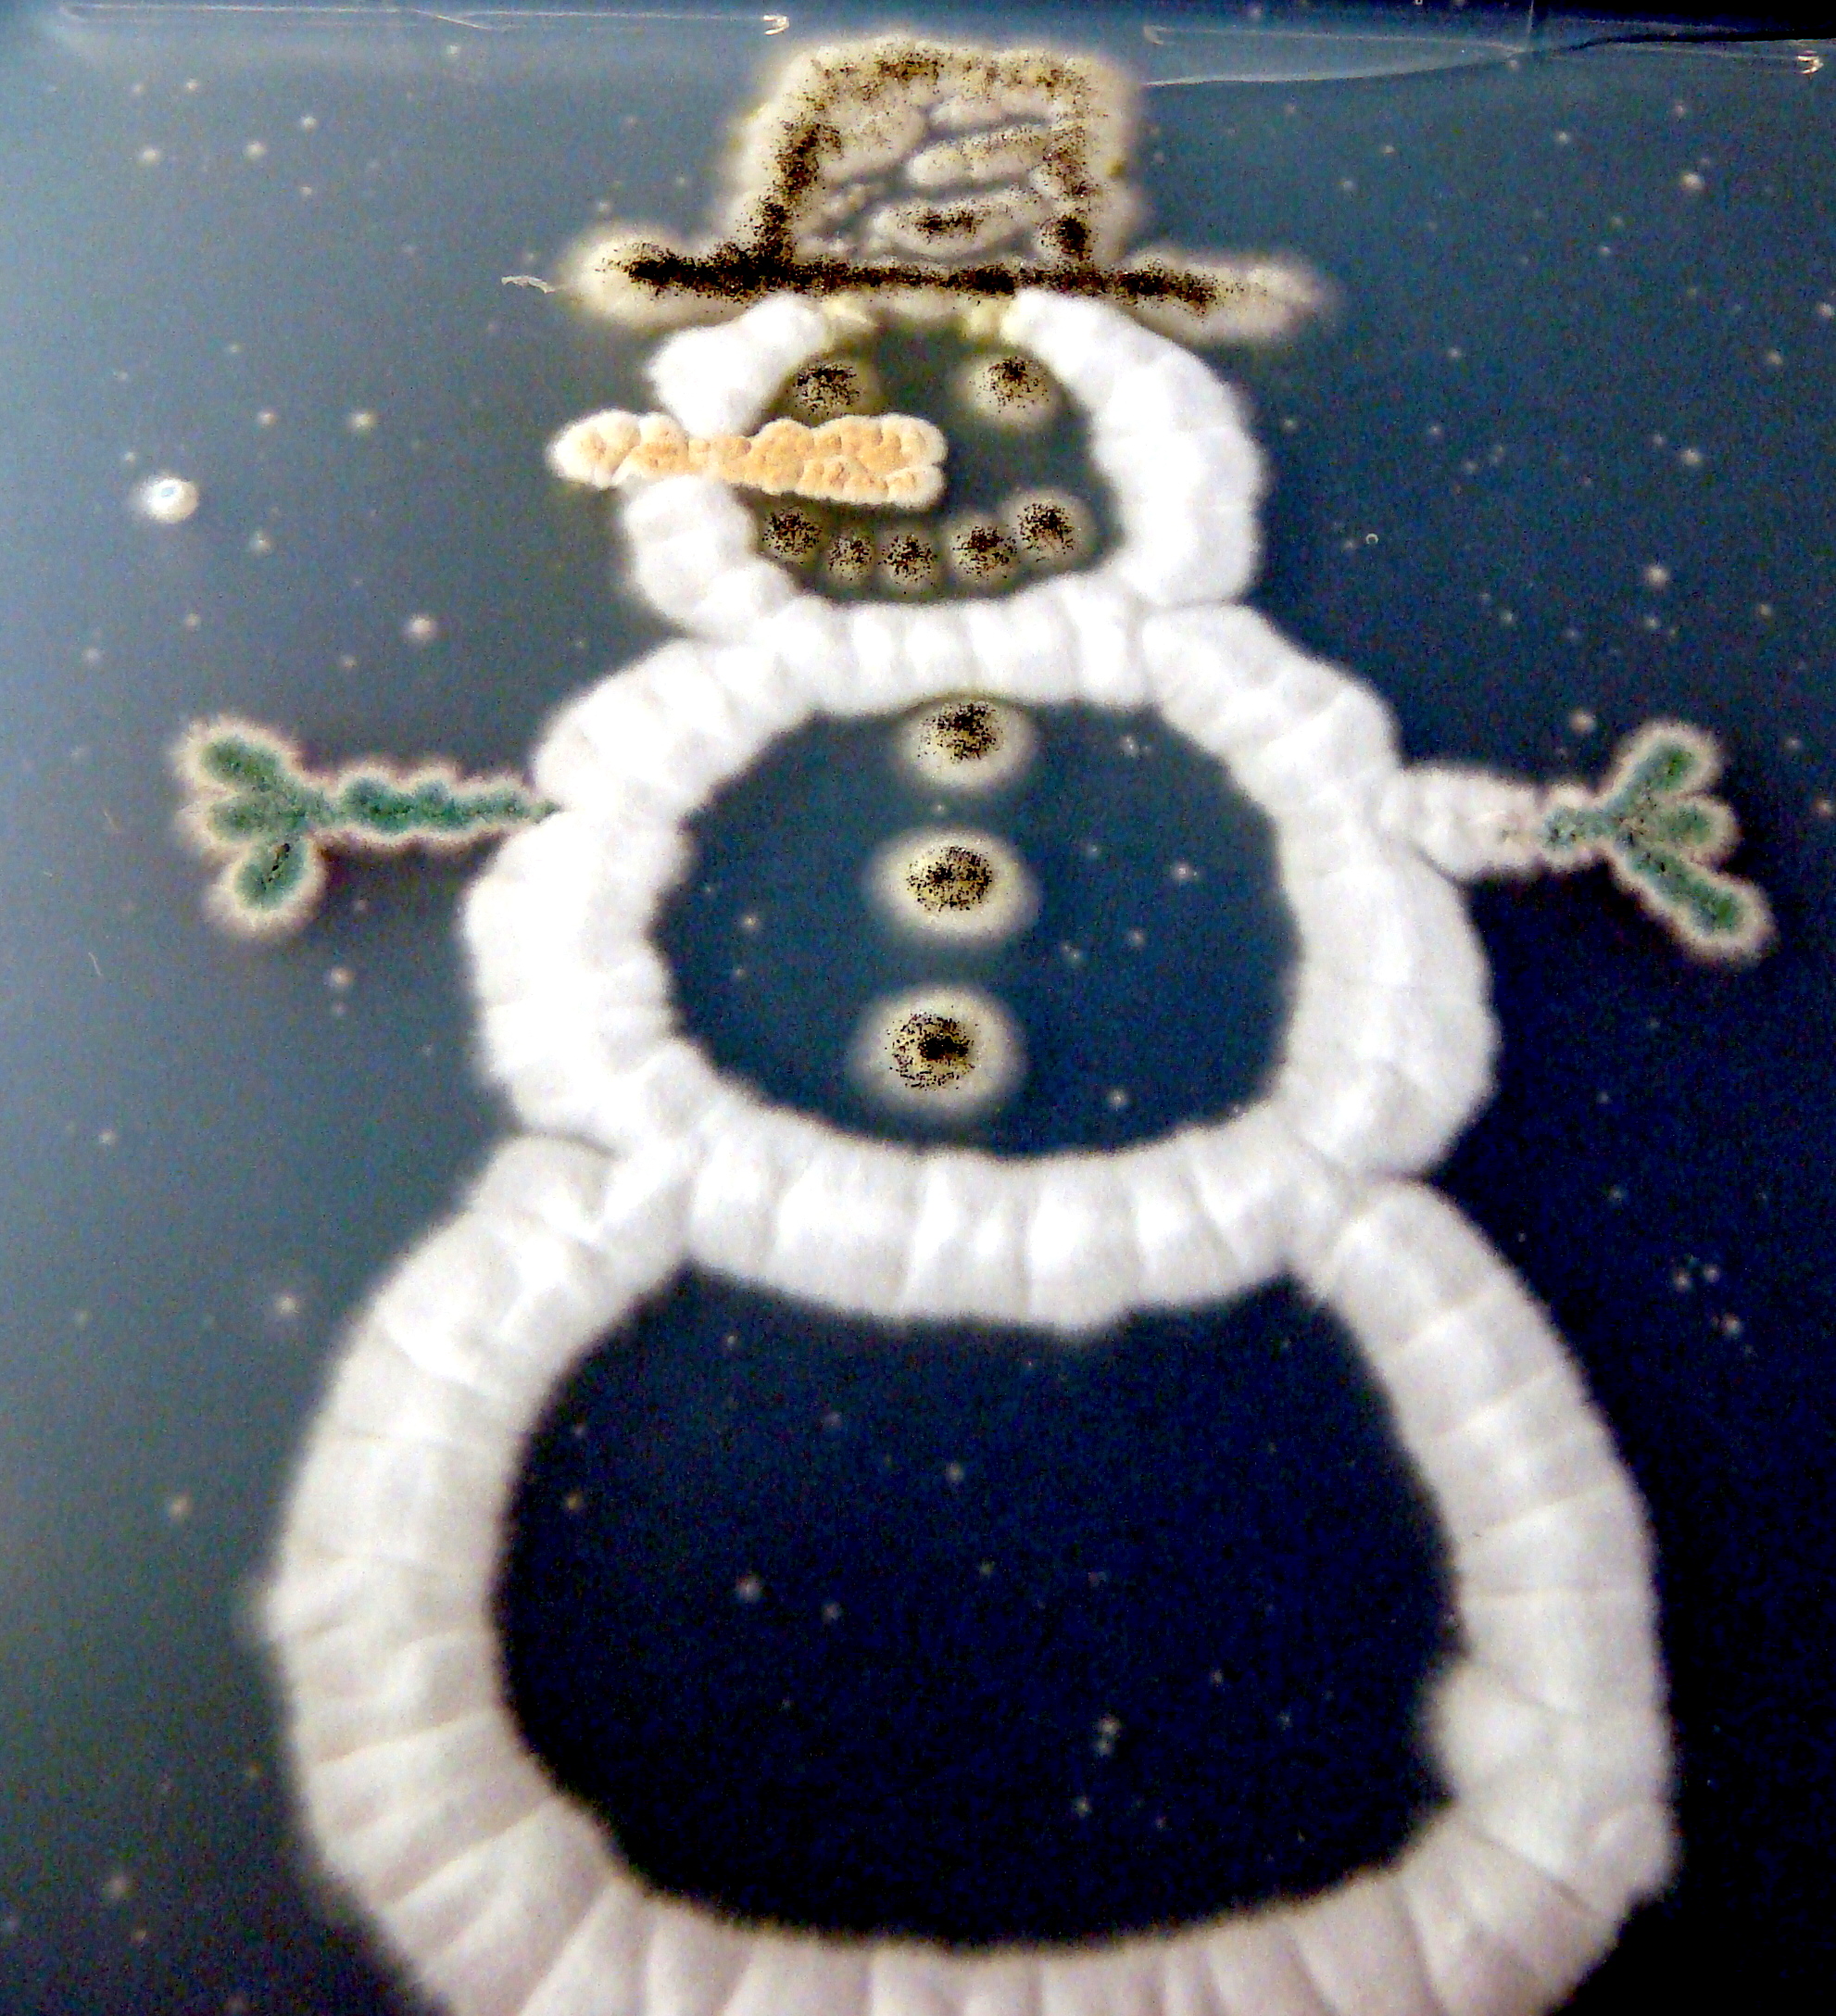 Fungal snowman. Hat, Eyes, Mouth, Buttons: Aspergillus niger; Arms: Aspergillus nidulans; Nose: Aspergillus terreus with Penicillium marneffei; Body: Neosartorya fischeri.